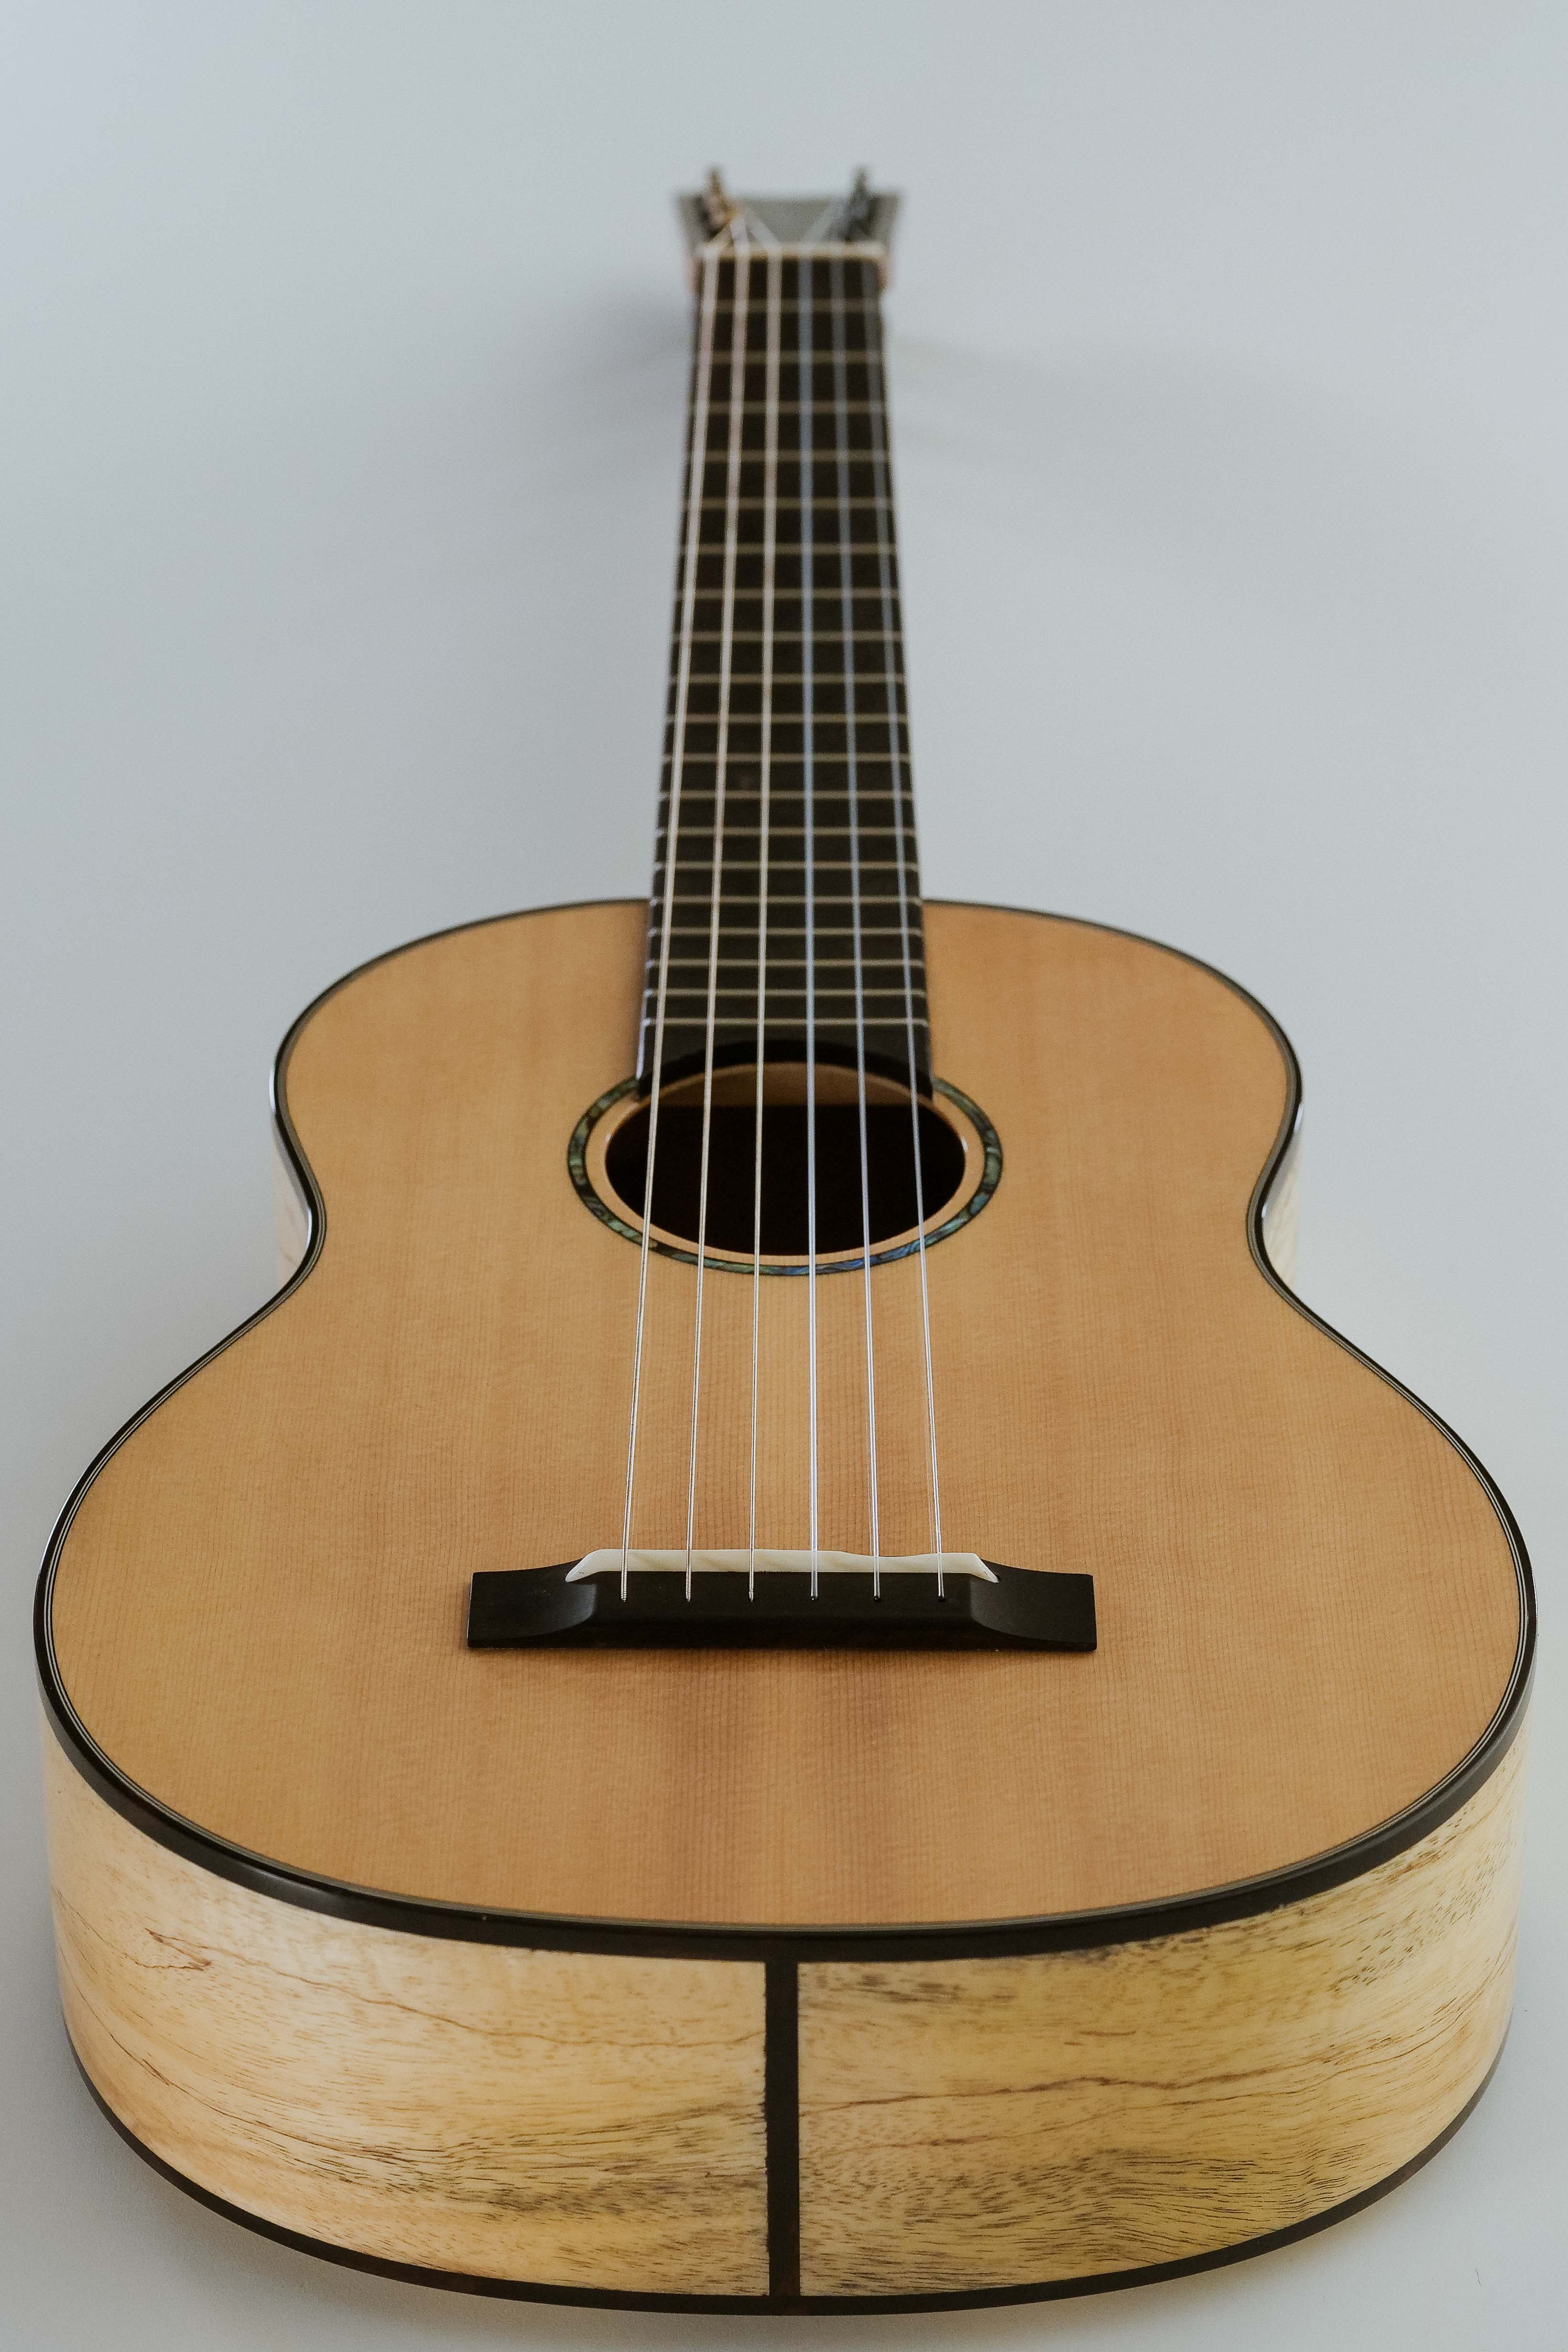 Romero Creations RC-P6-SMG Parlor Guitar